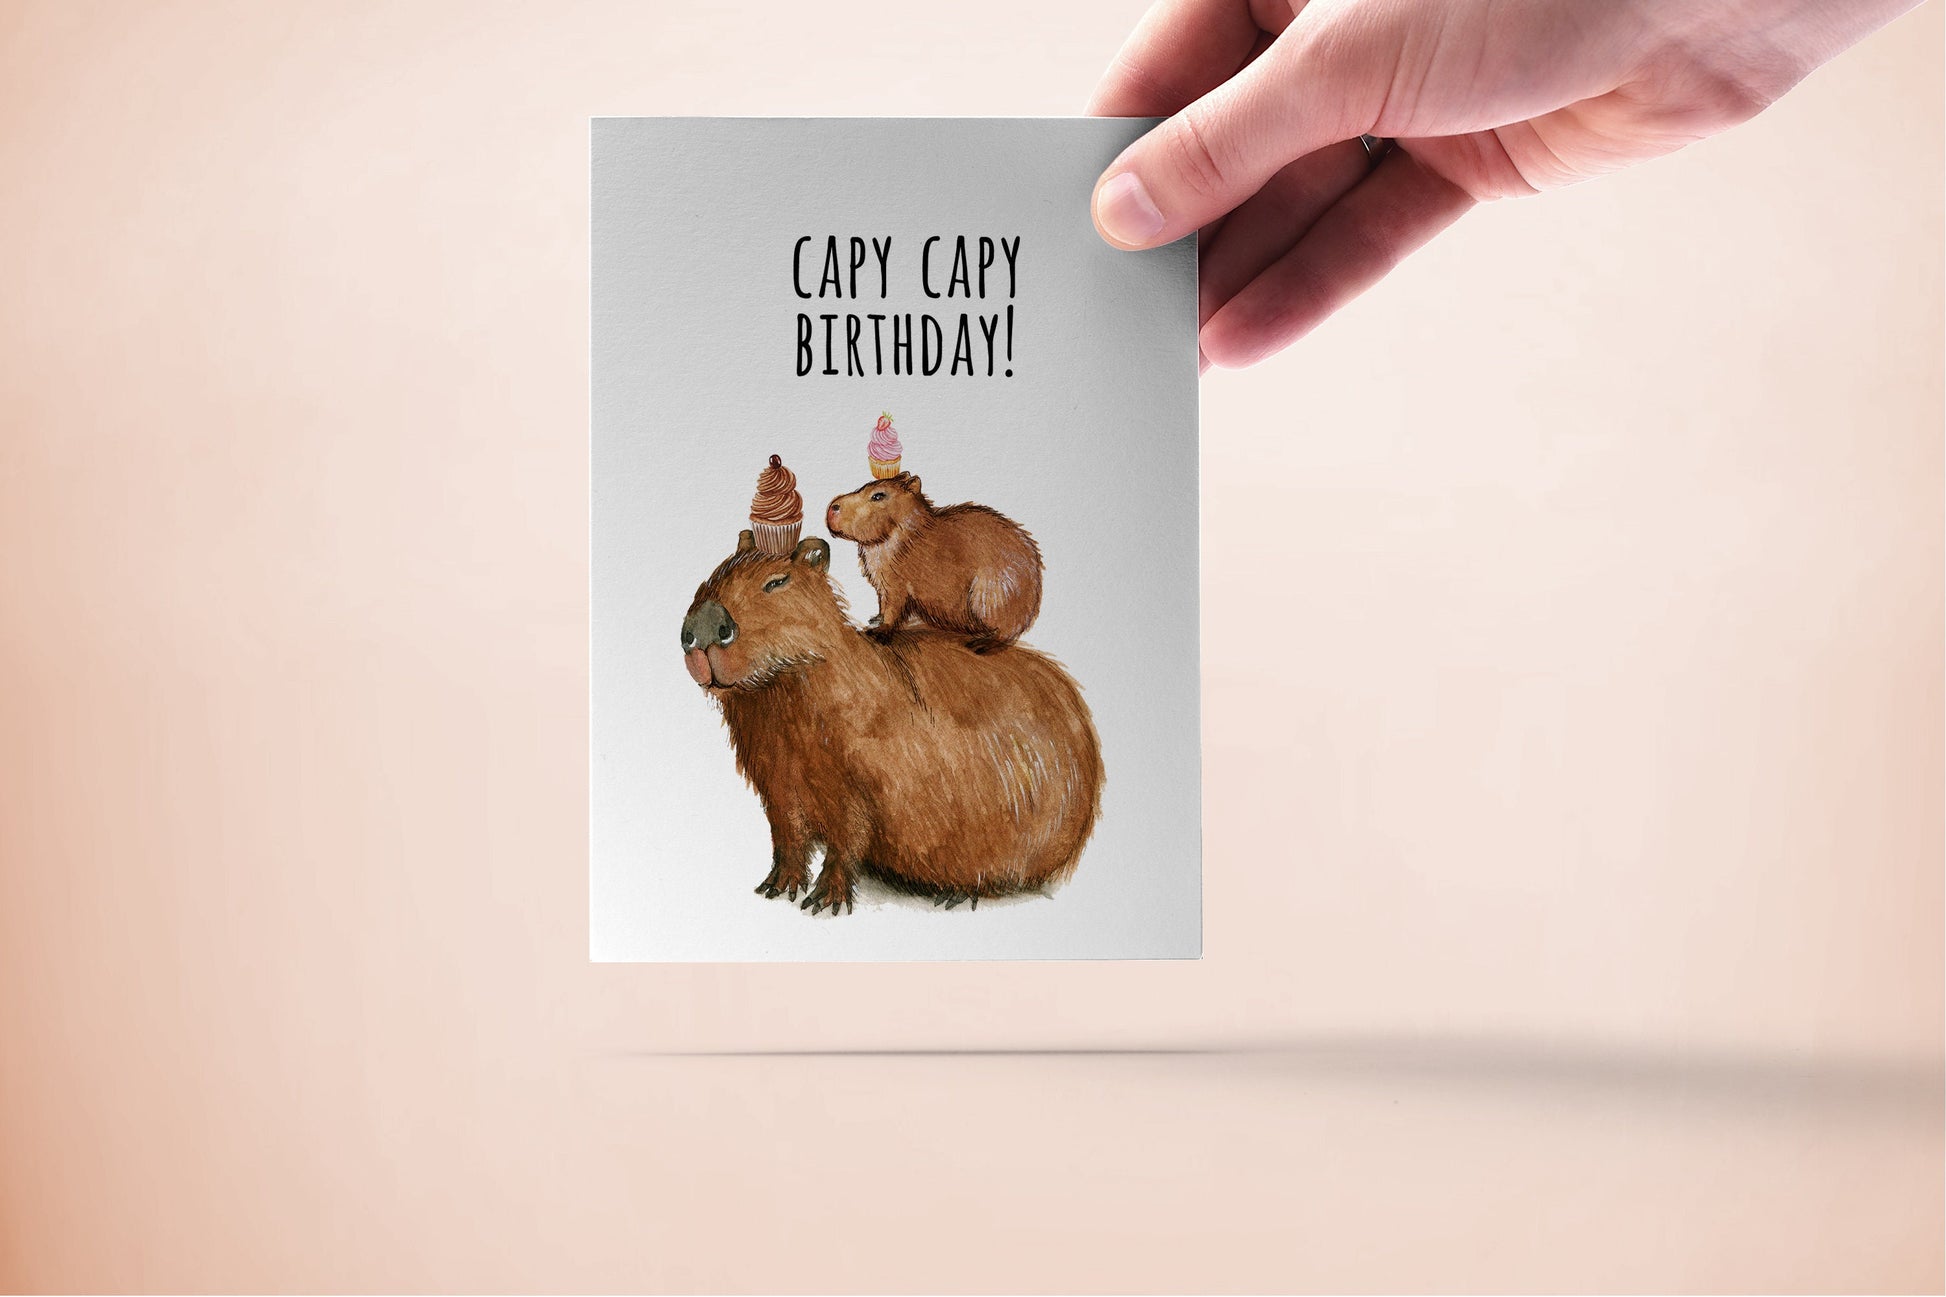 Capybara Birthday Card For Friends - Capy Birthday Puns - Mom And Baby Birthday Cards Funny